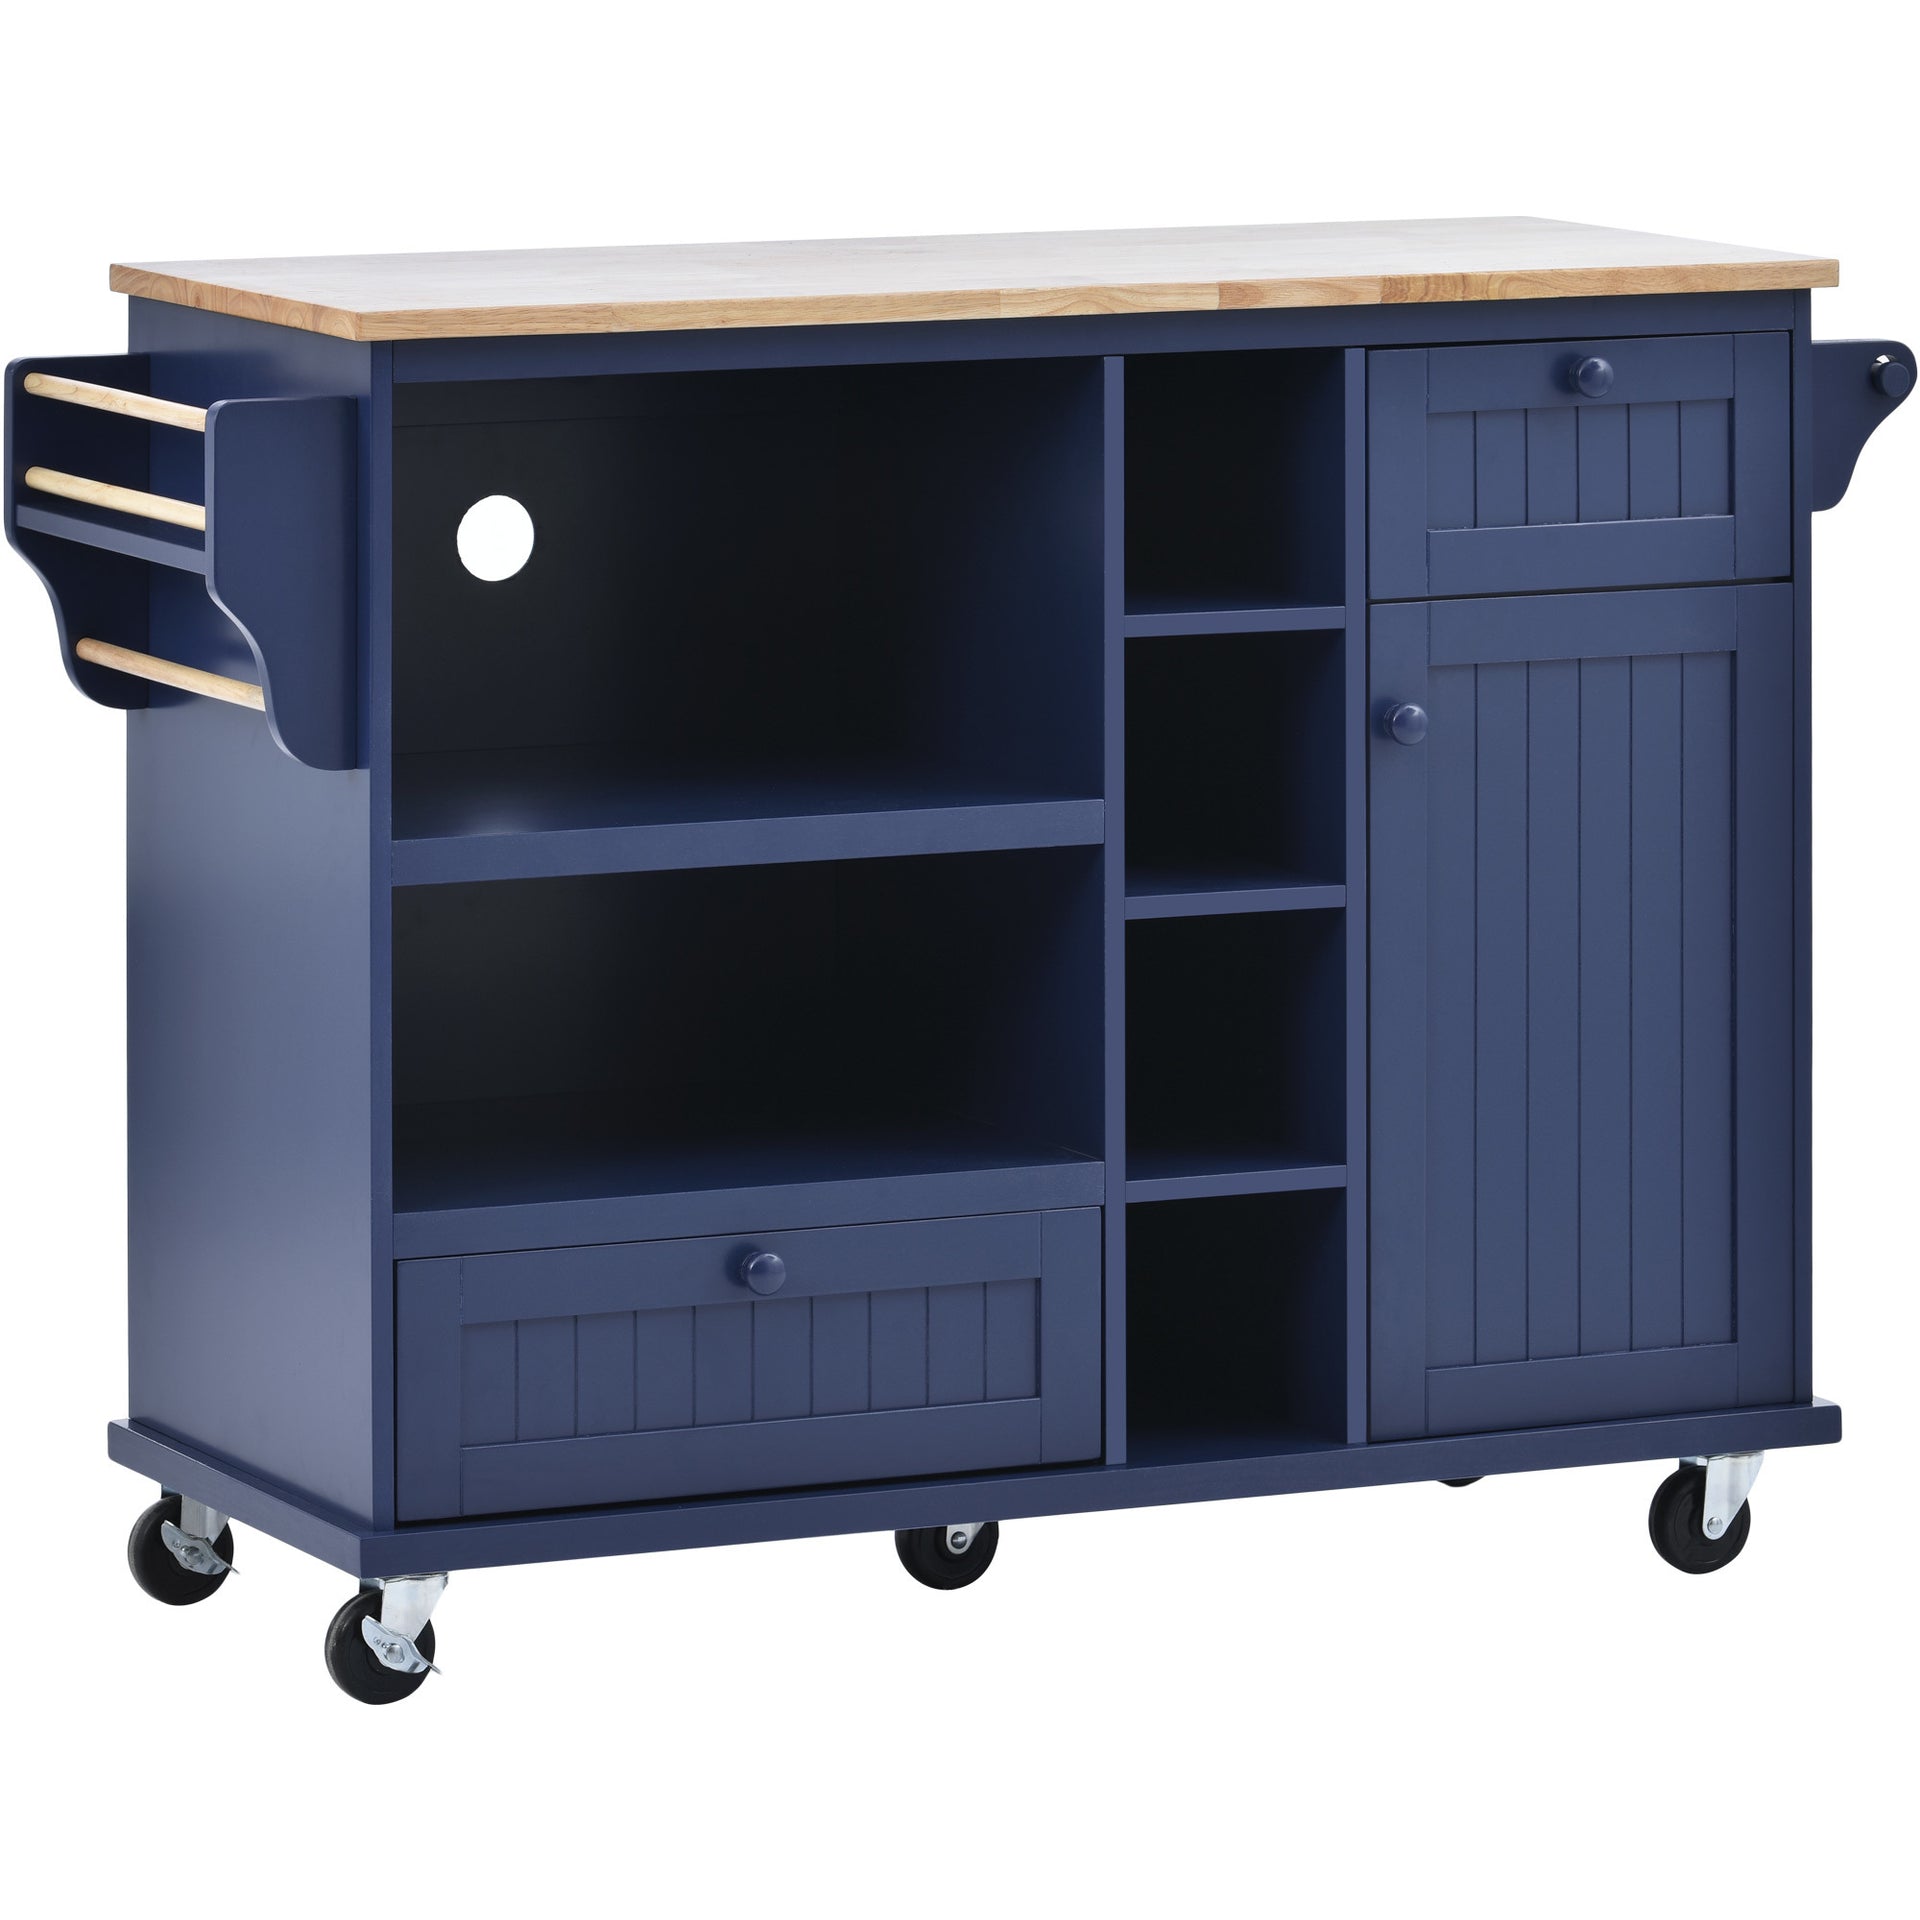 Kitchen Island Cart with Storage Cabinets, Blue